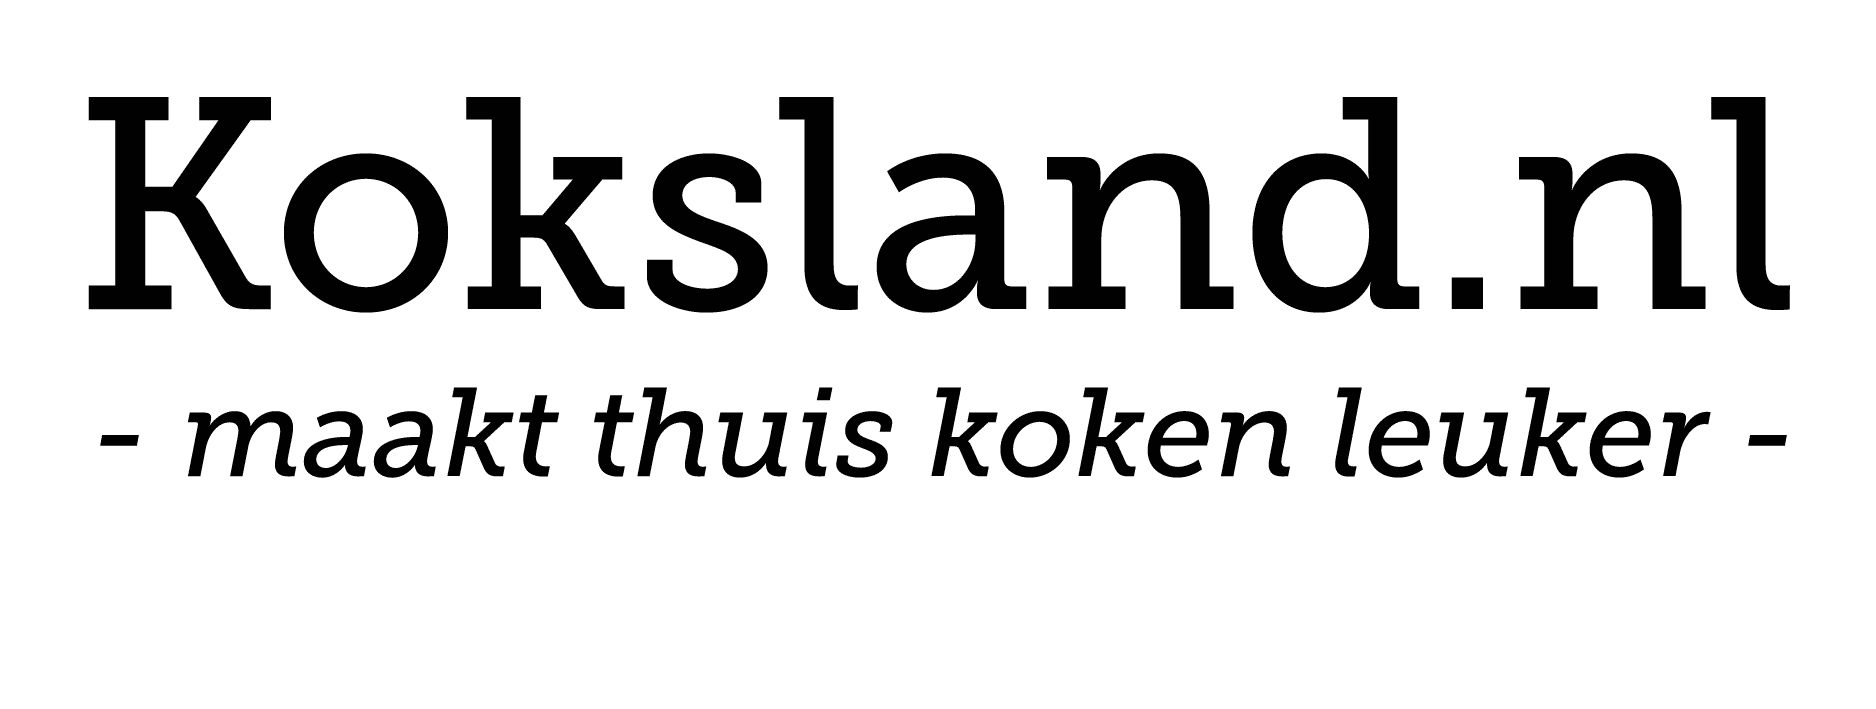 Koksland.nl & deKookworkshop.nl